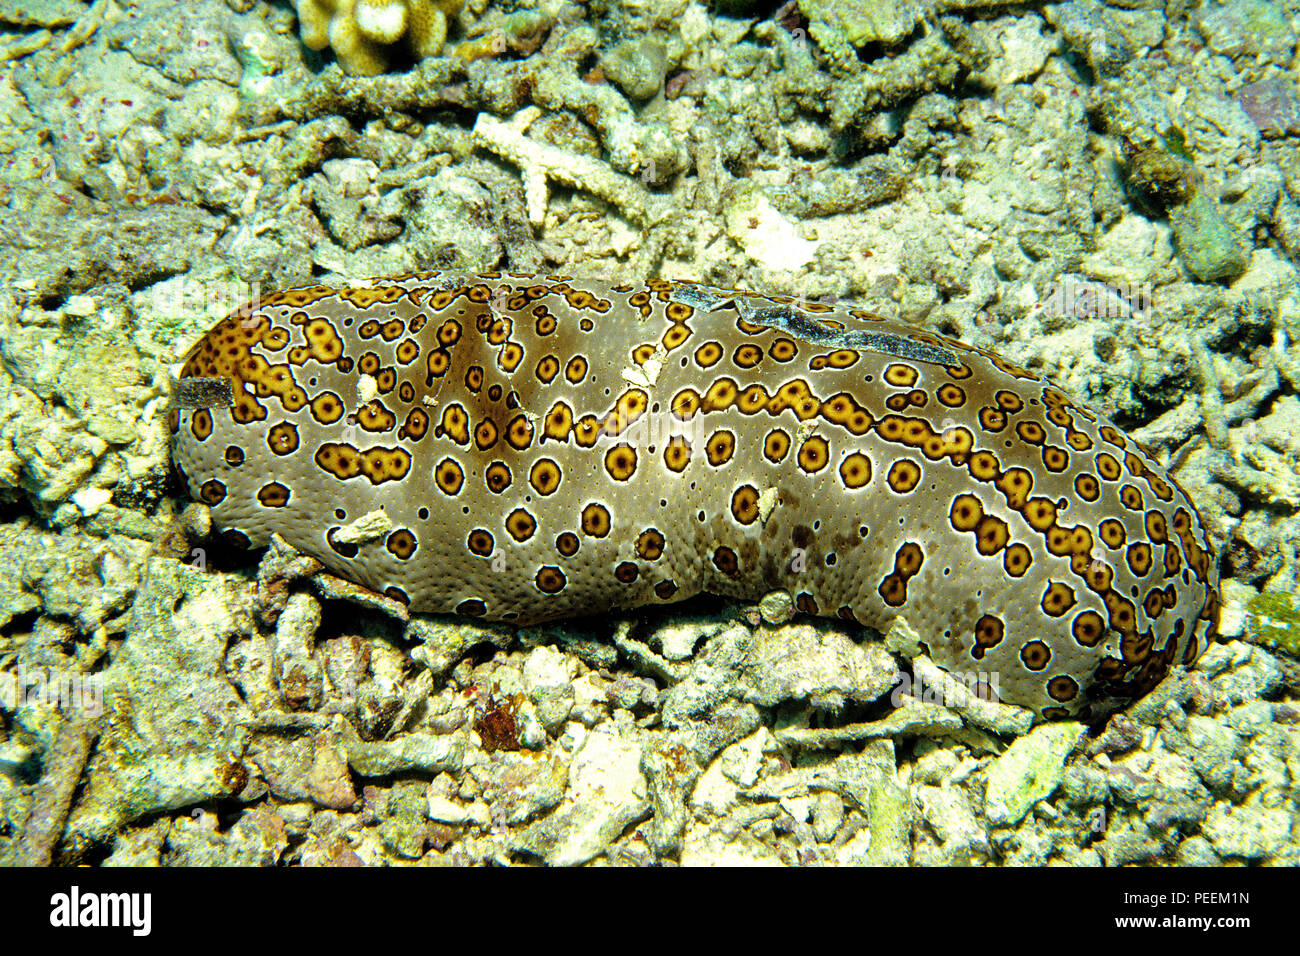 Leopardfish Sea Cucumber or Leopard Sea Cucumber (Bohadschia argus), Pulau Sipadan, Sabah, Borneo Malaysia Stock Photo